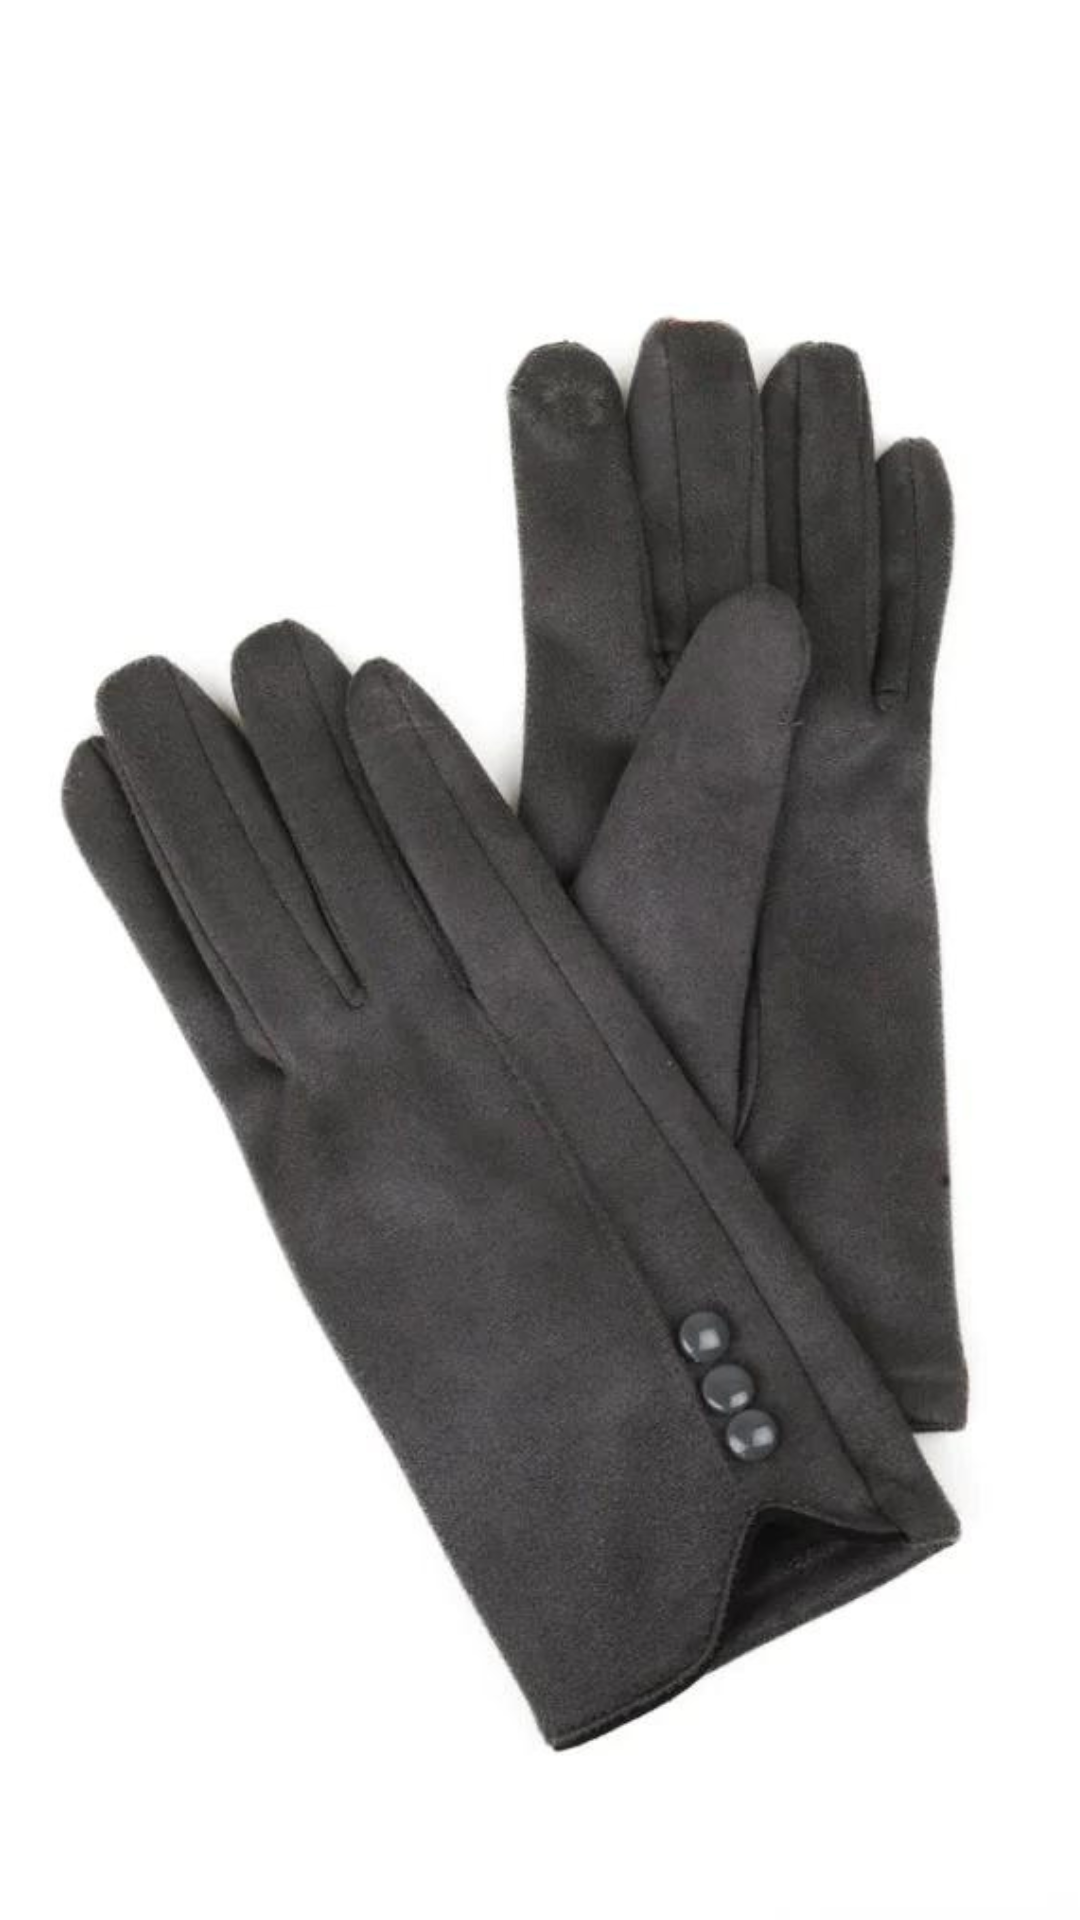 Soft & Stretchy Button & Stitch Grey Glove. Style CARA9000-GRY